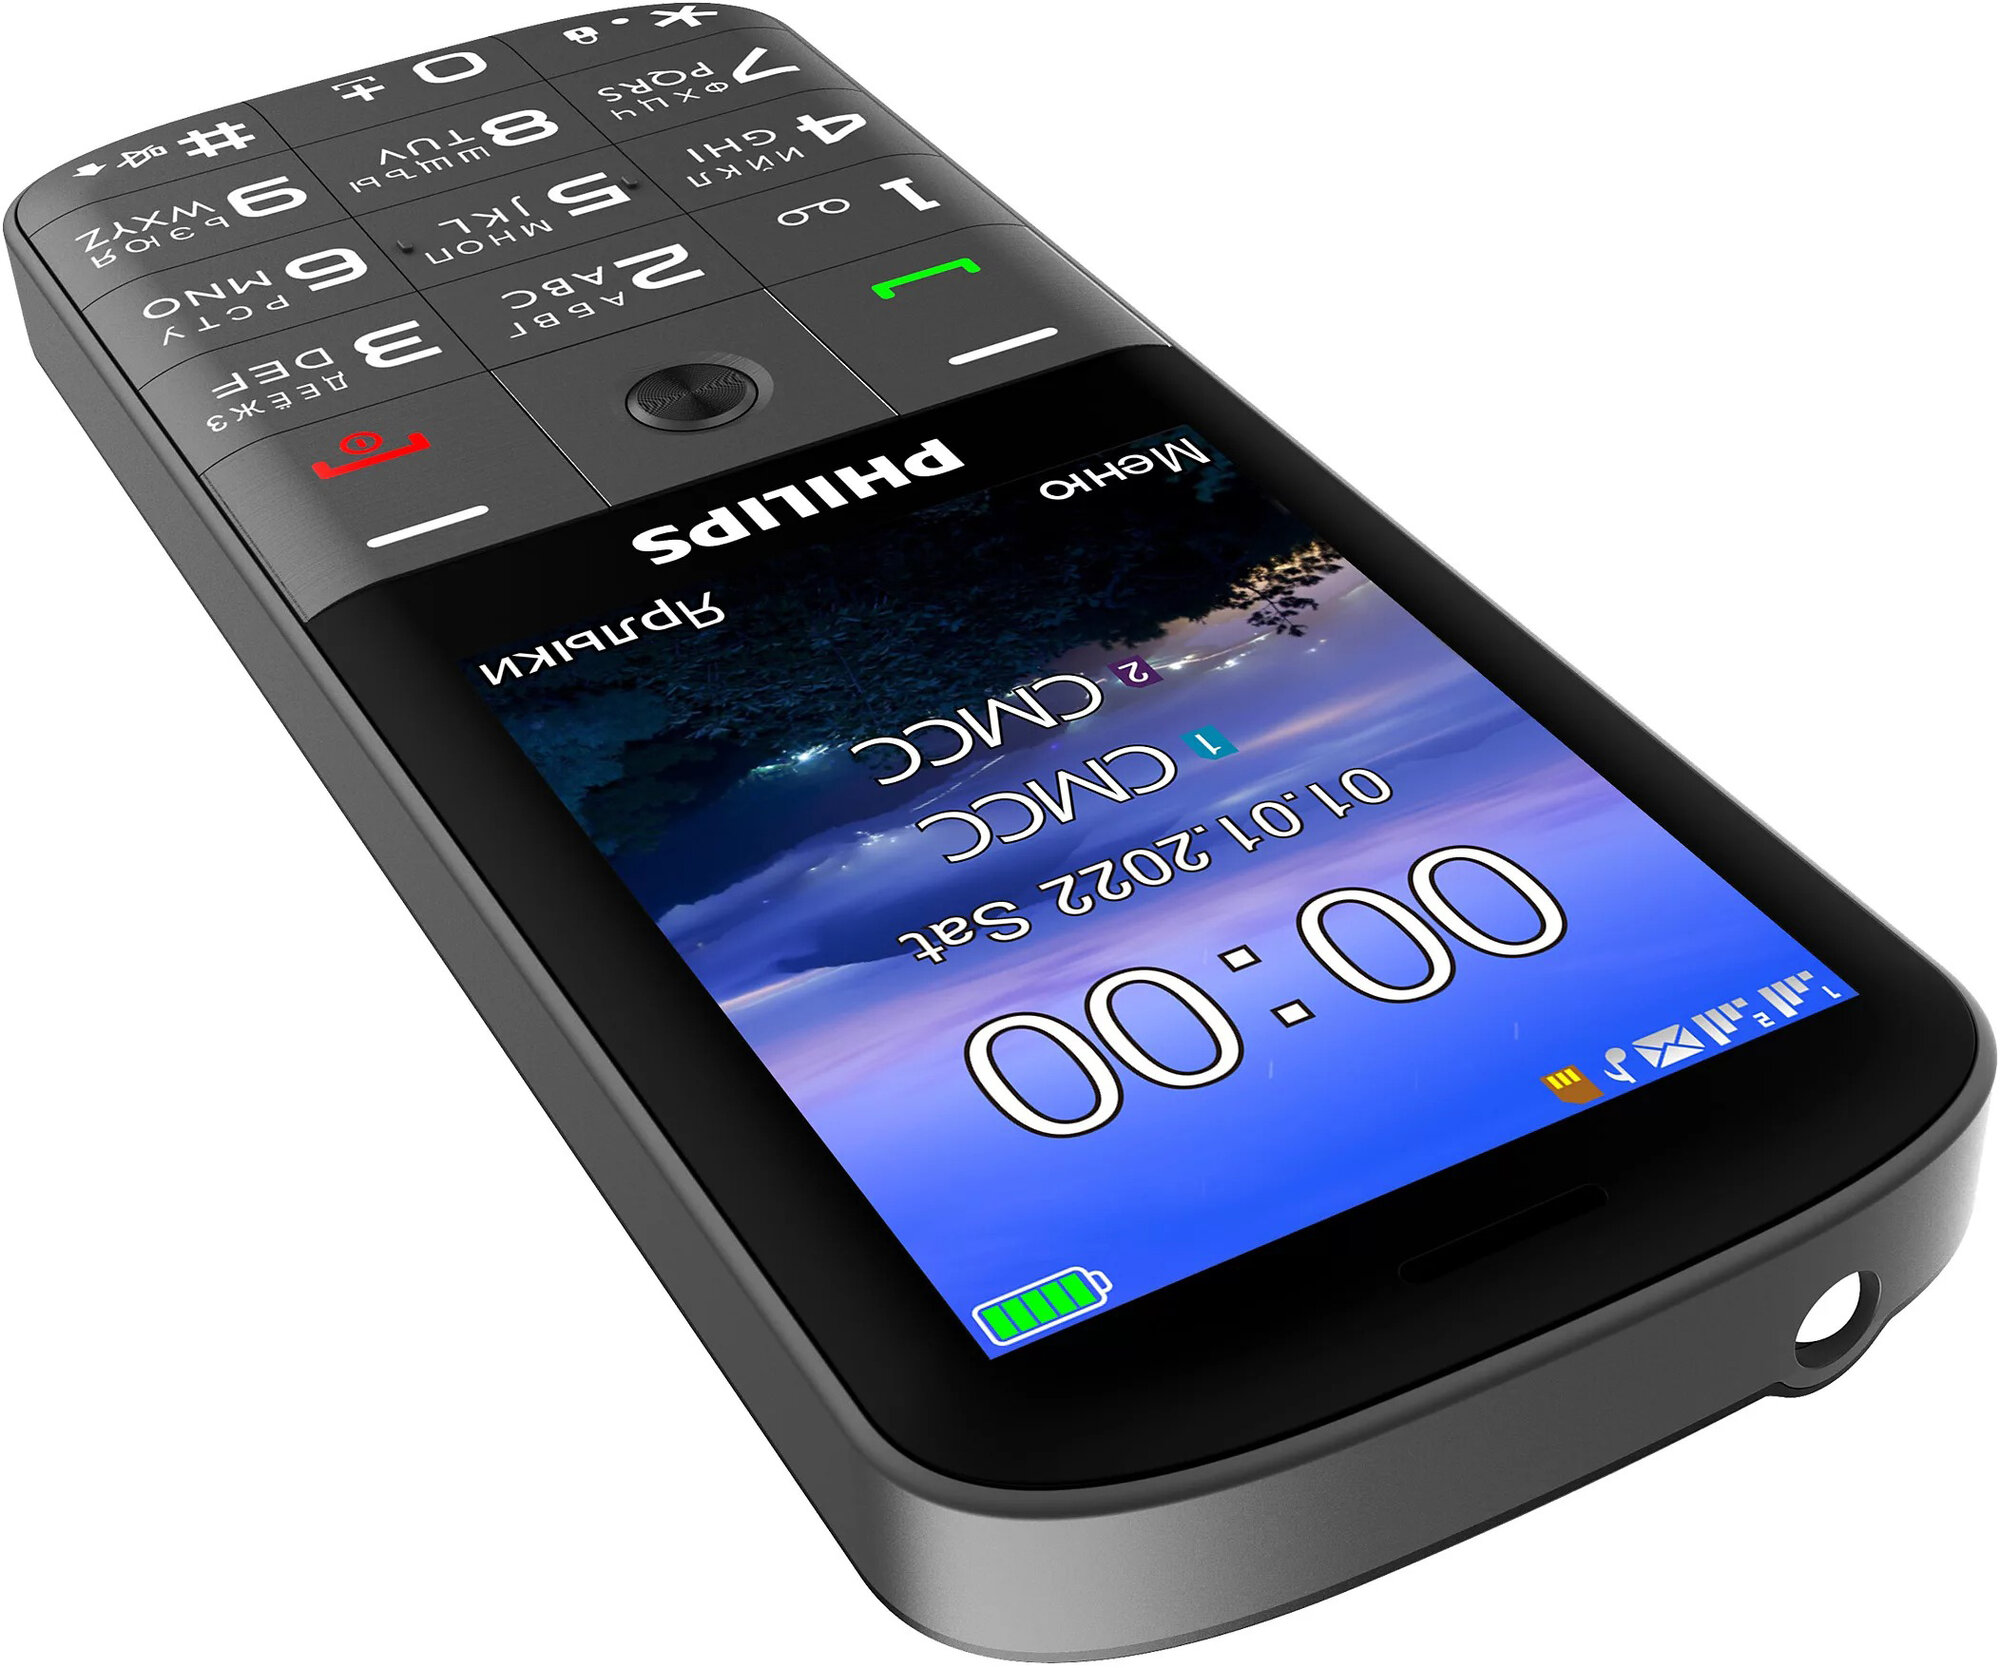 Сотовый телефон Philips Xenium E227 Dark Grey